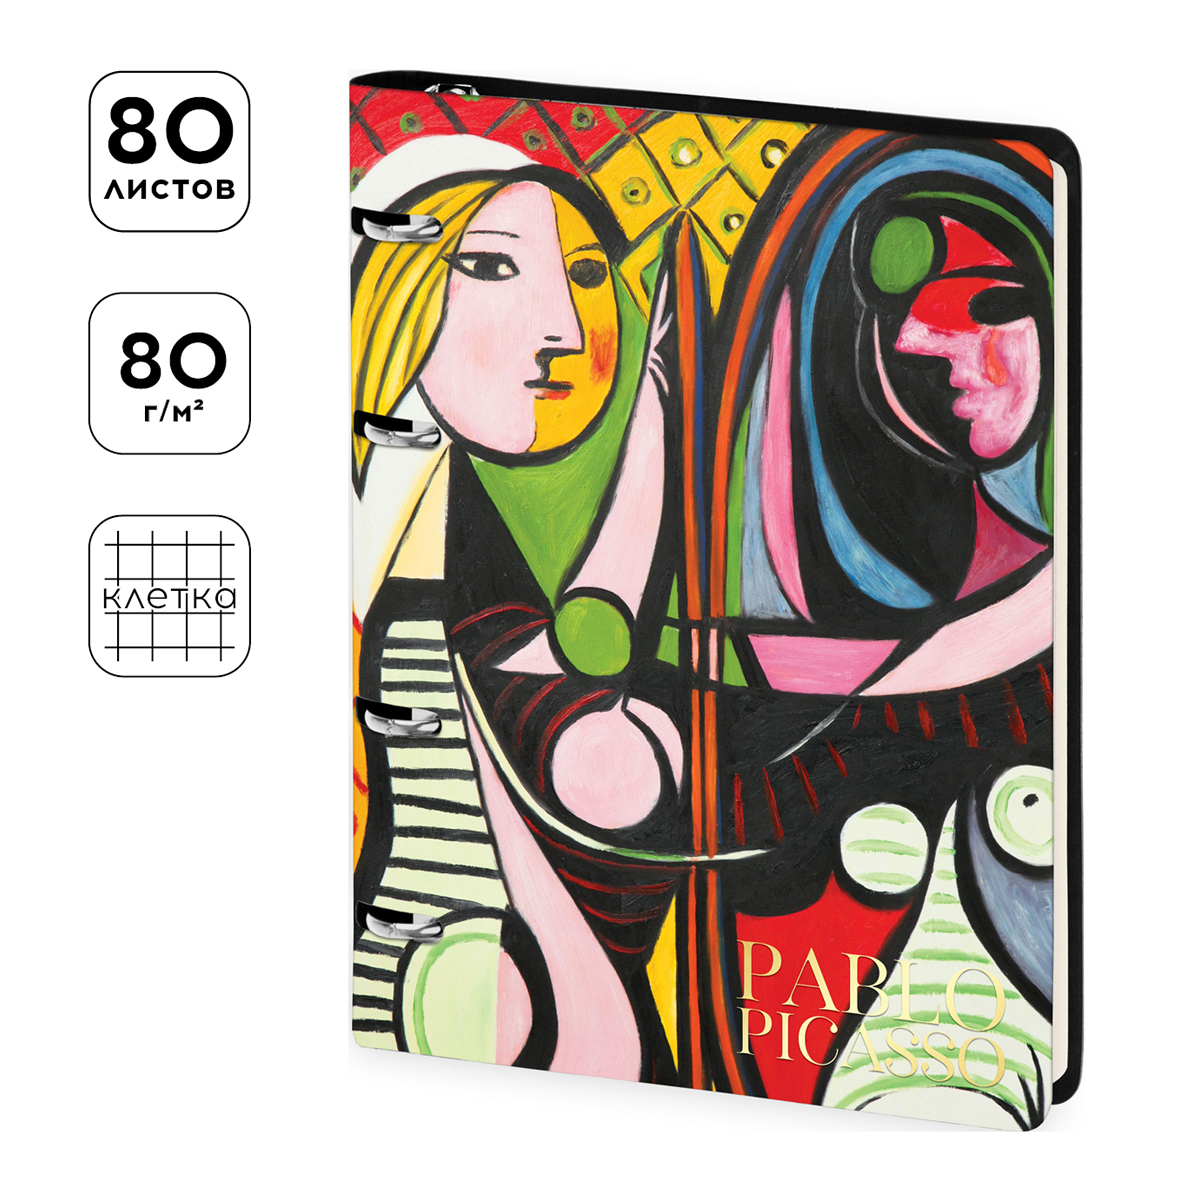 Picasso 50x65 (белый) Рамка купить в Минске, Гомеле, Витебске, Могилеве, Бресте, Гродно